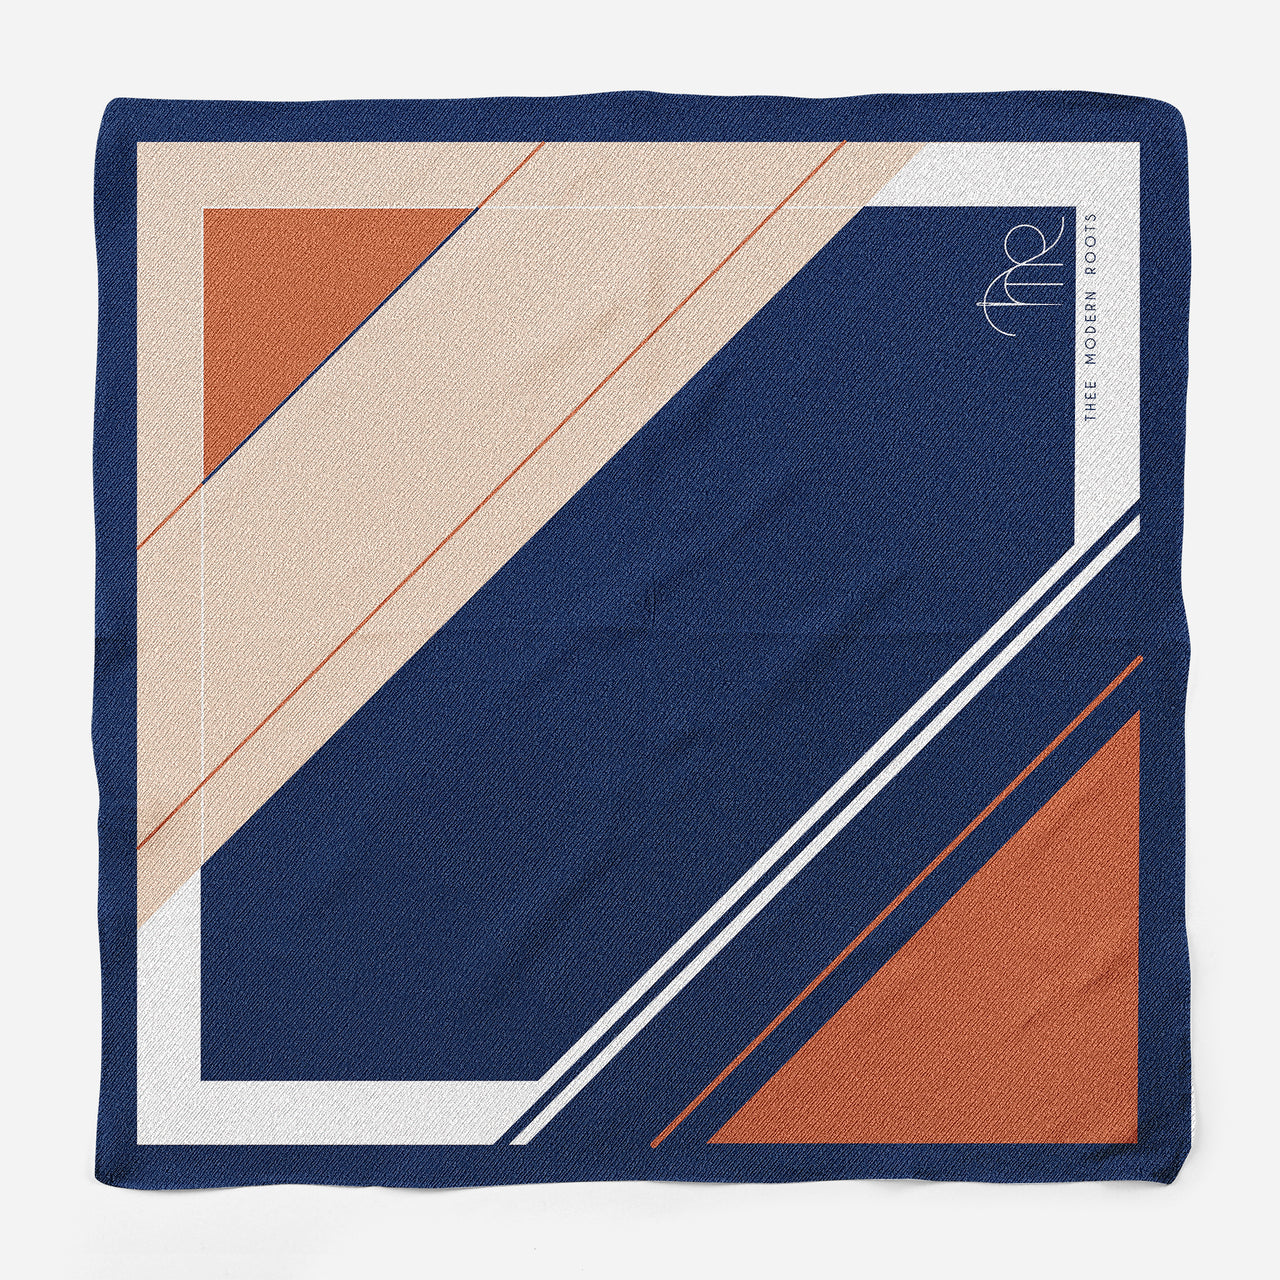 Handmade linen pocket squares